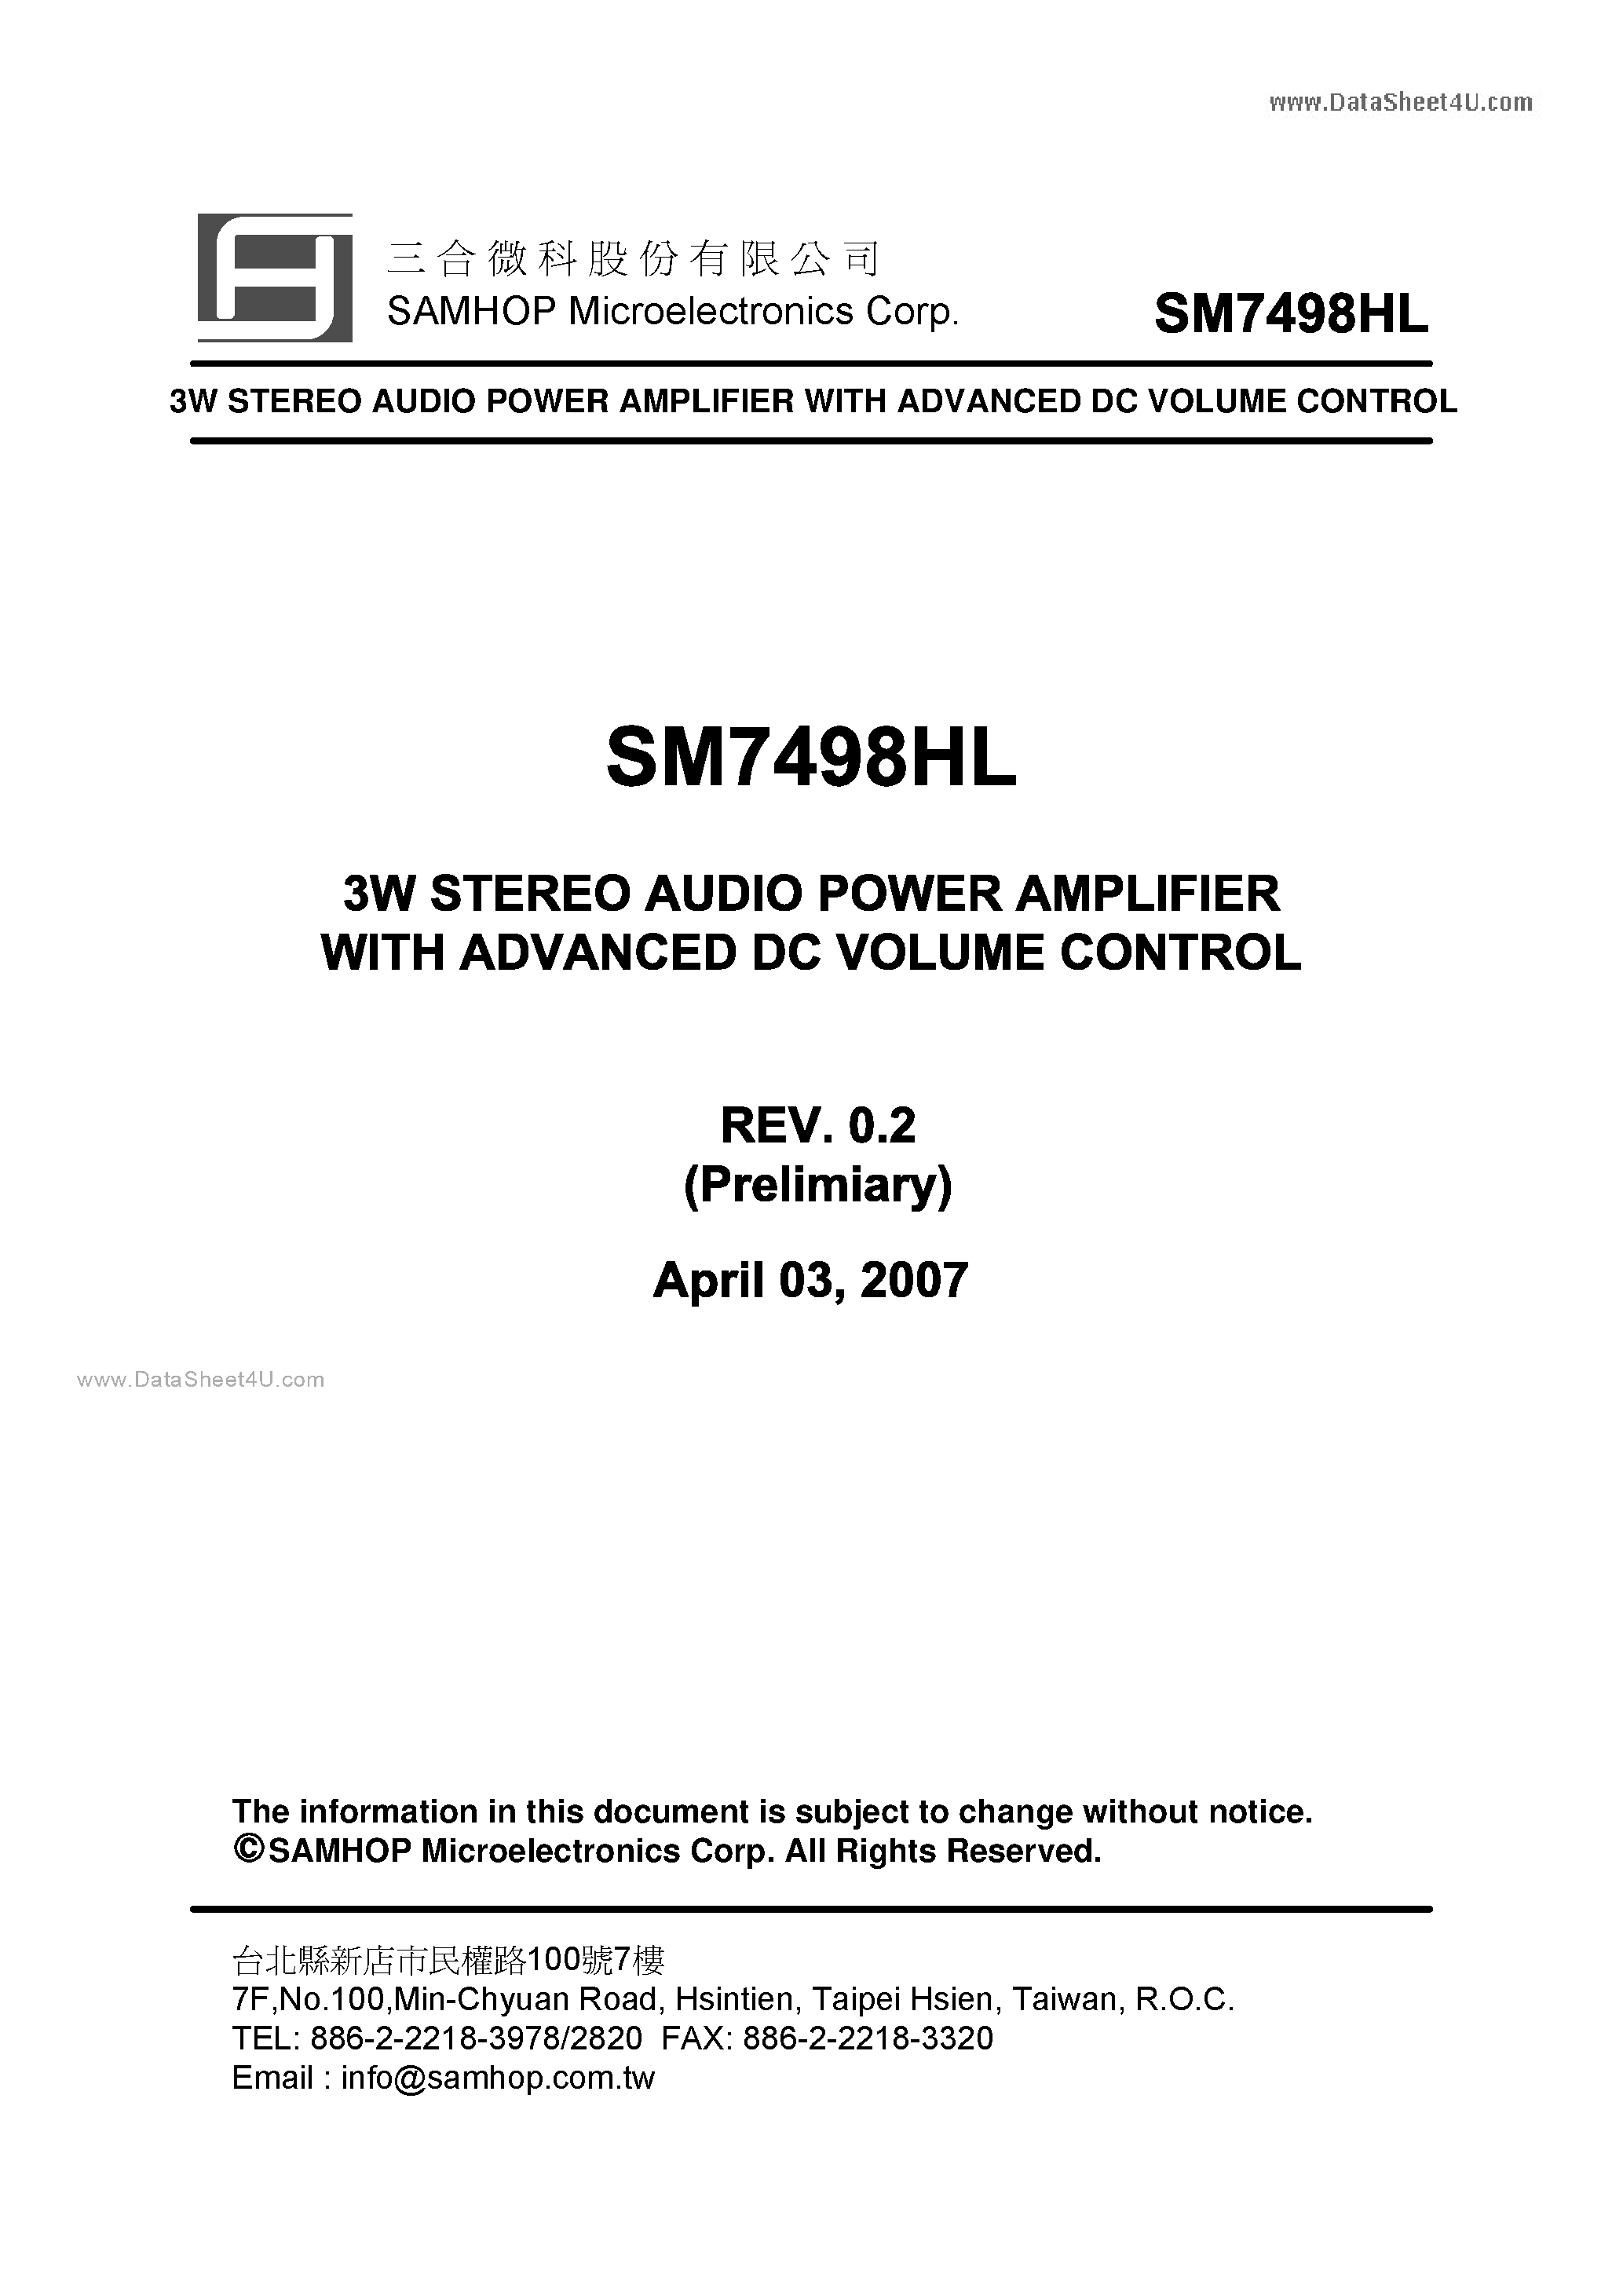 Даташит SM7498HL - 3W STEREO AUDIO POWER AMPLIFIER страница 1